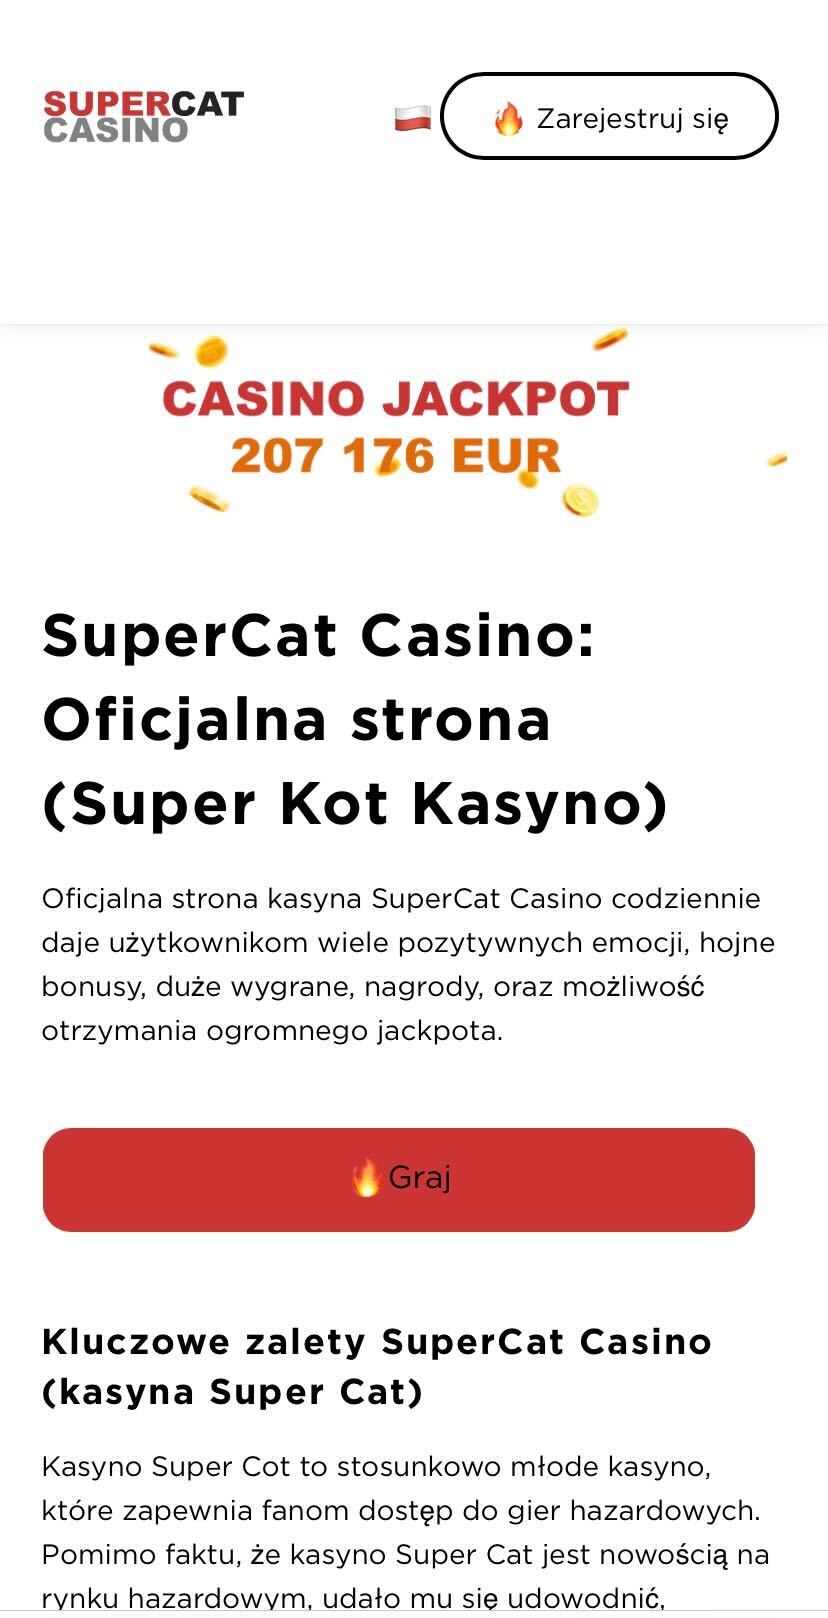 Super Cat Casino Mobile Review